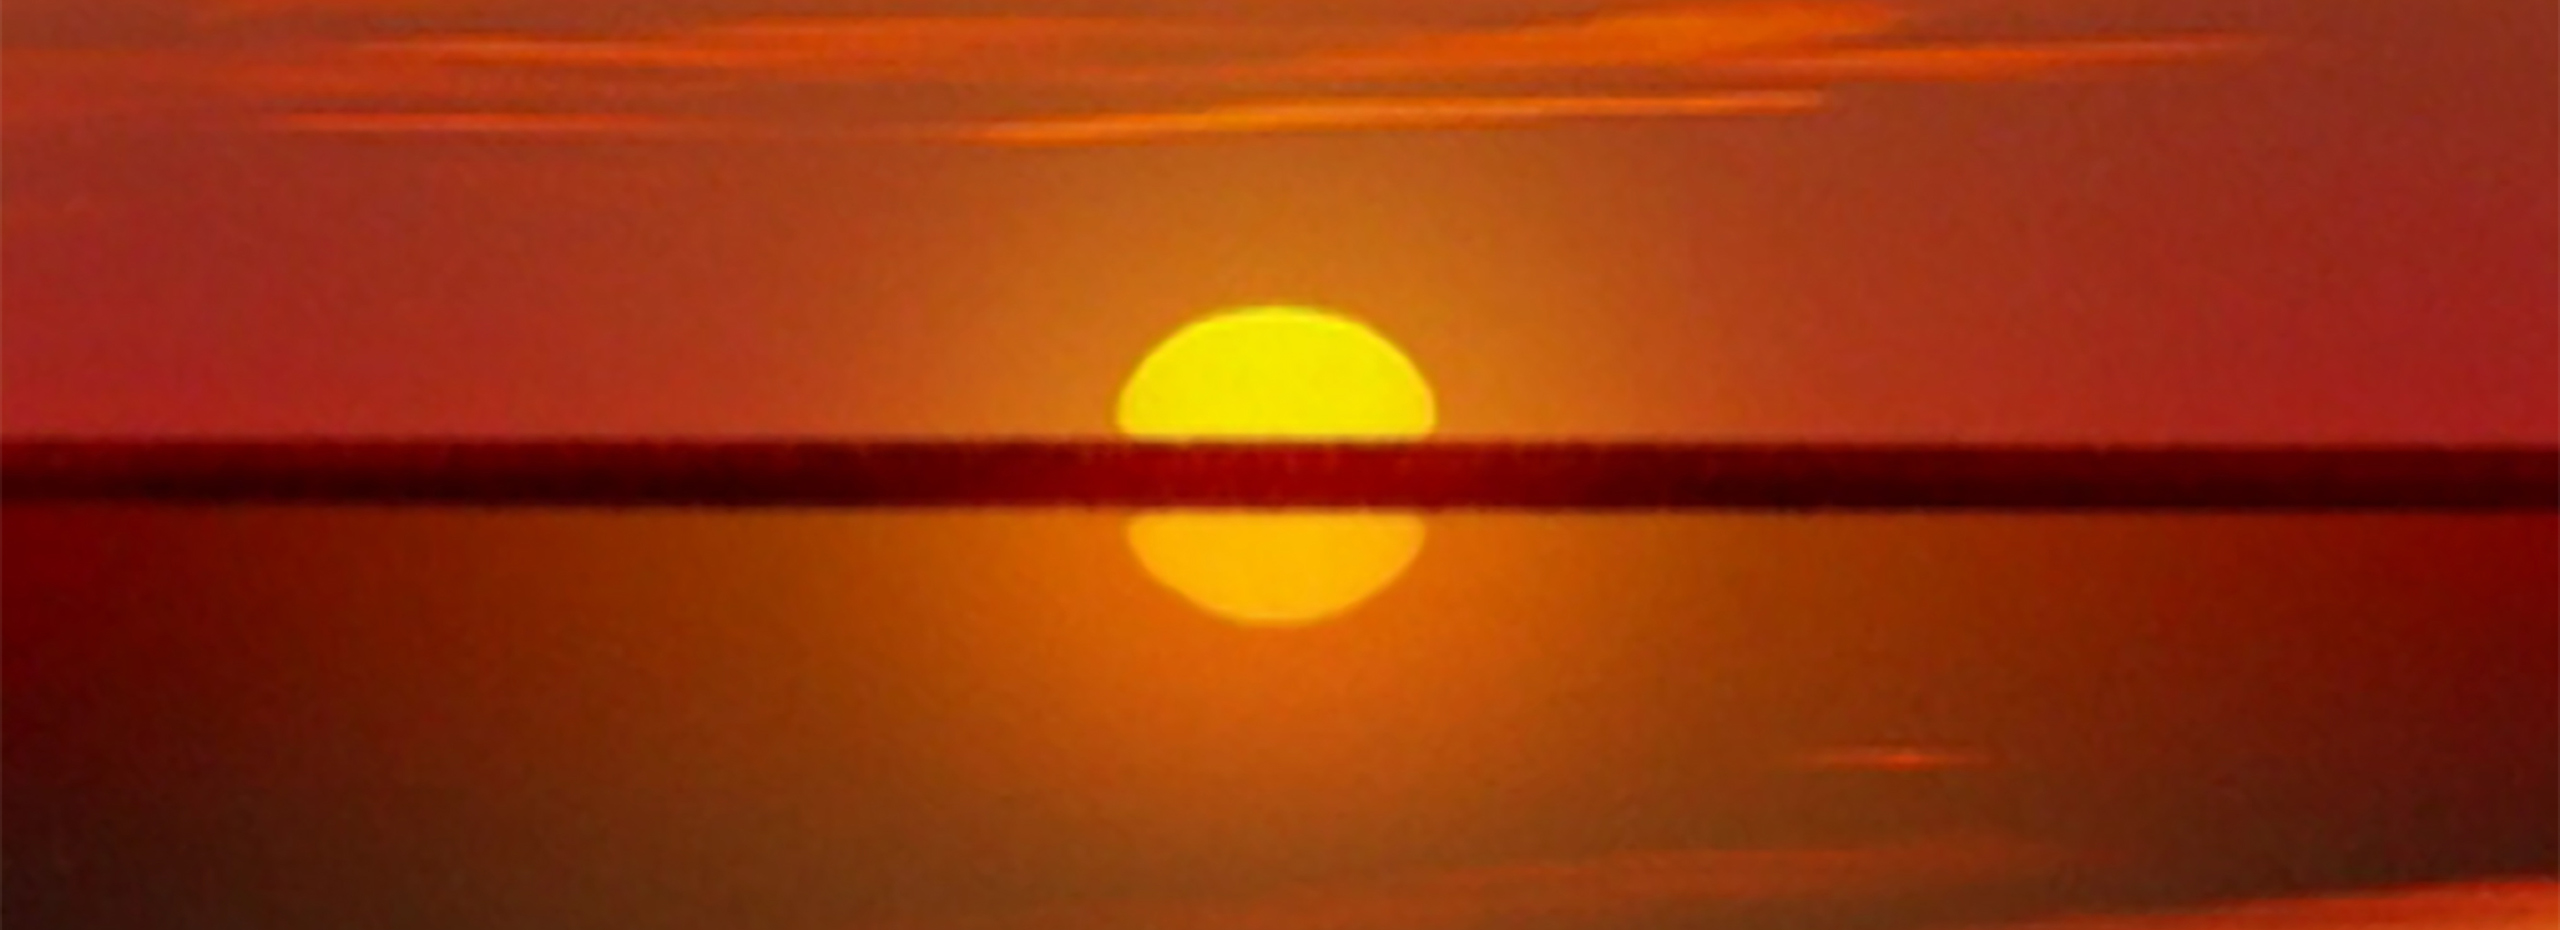 A yellow sun breaks a horizon line with orange sky reflected in water below